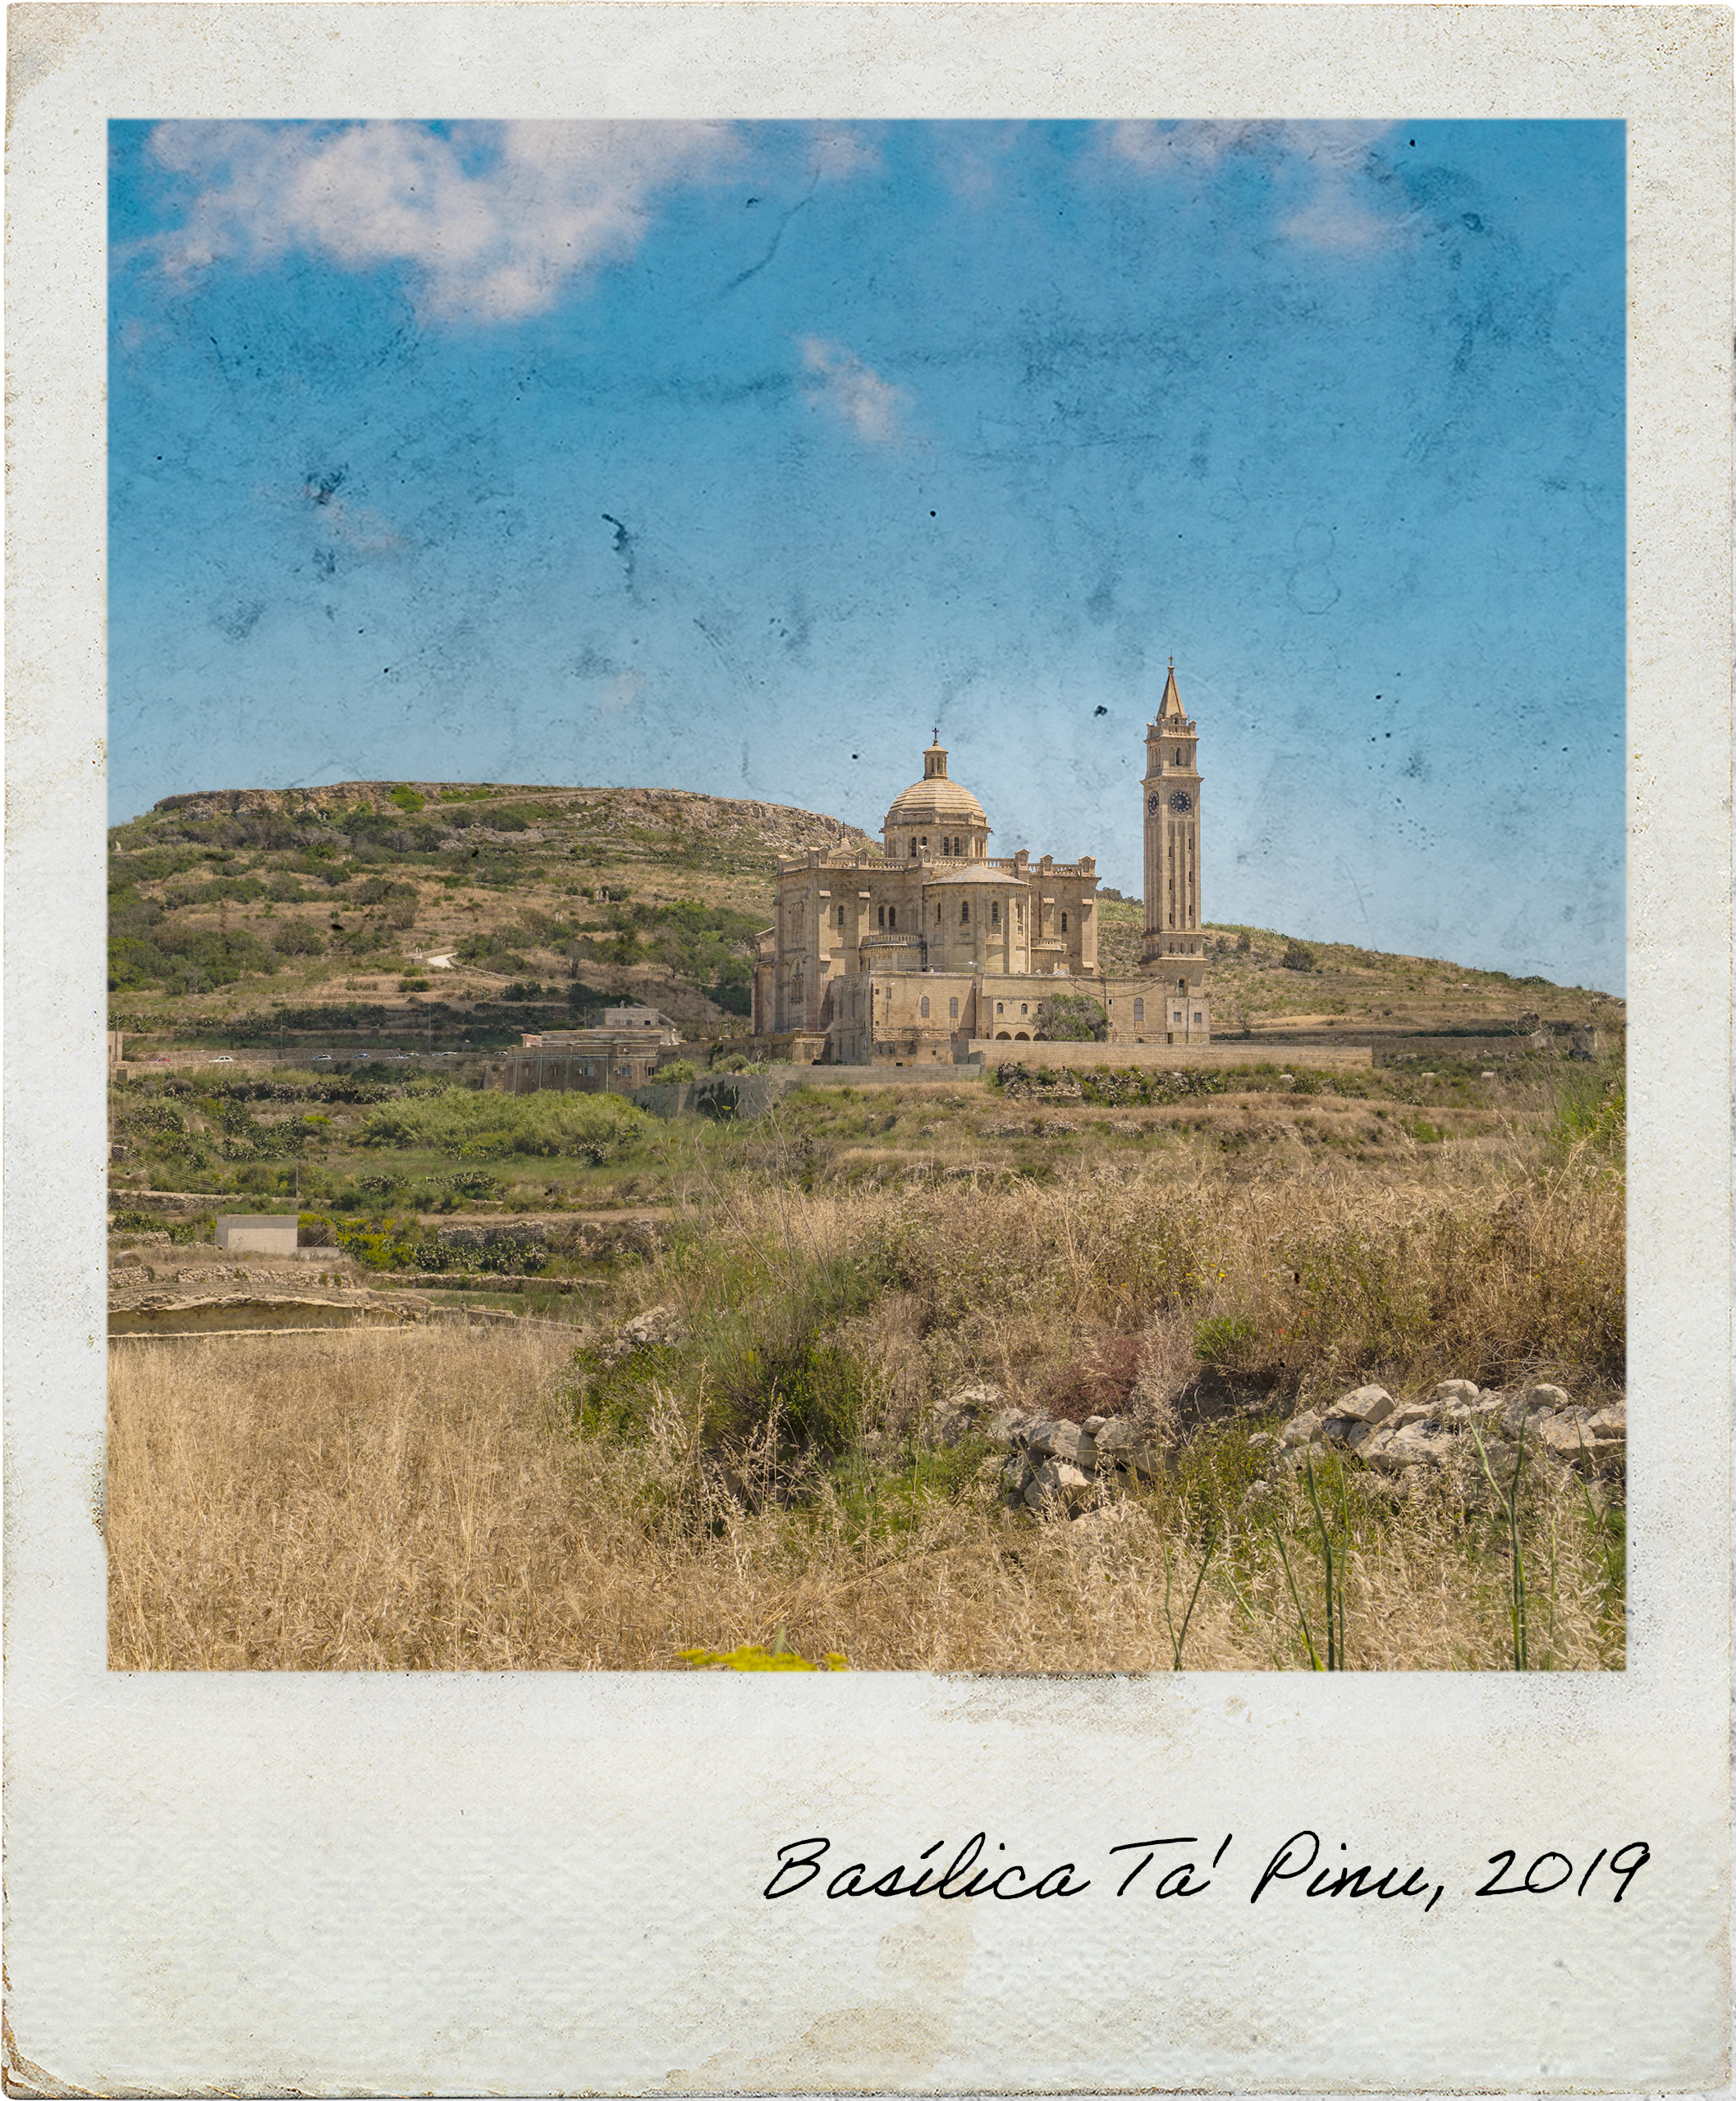 View over the Basilica Ta' Pinu